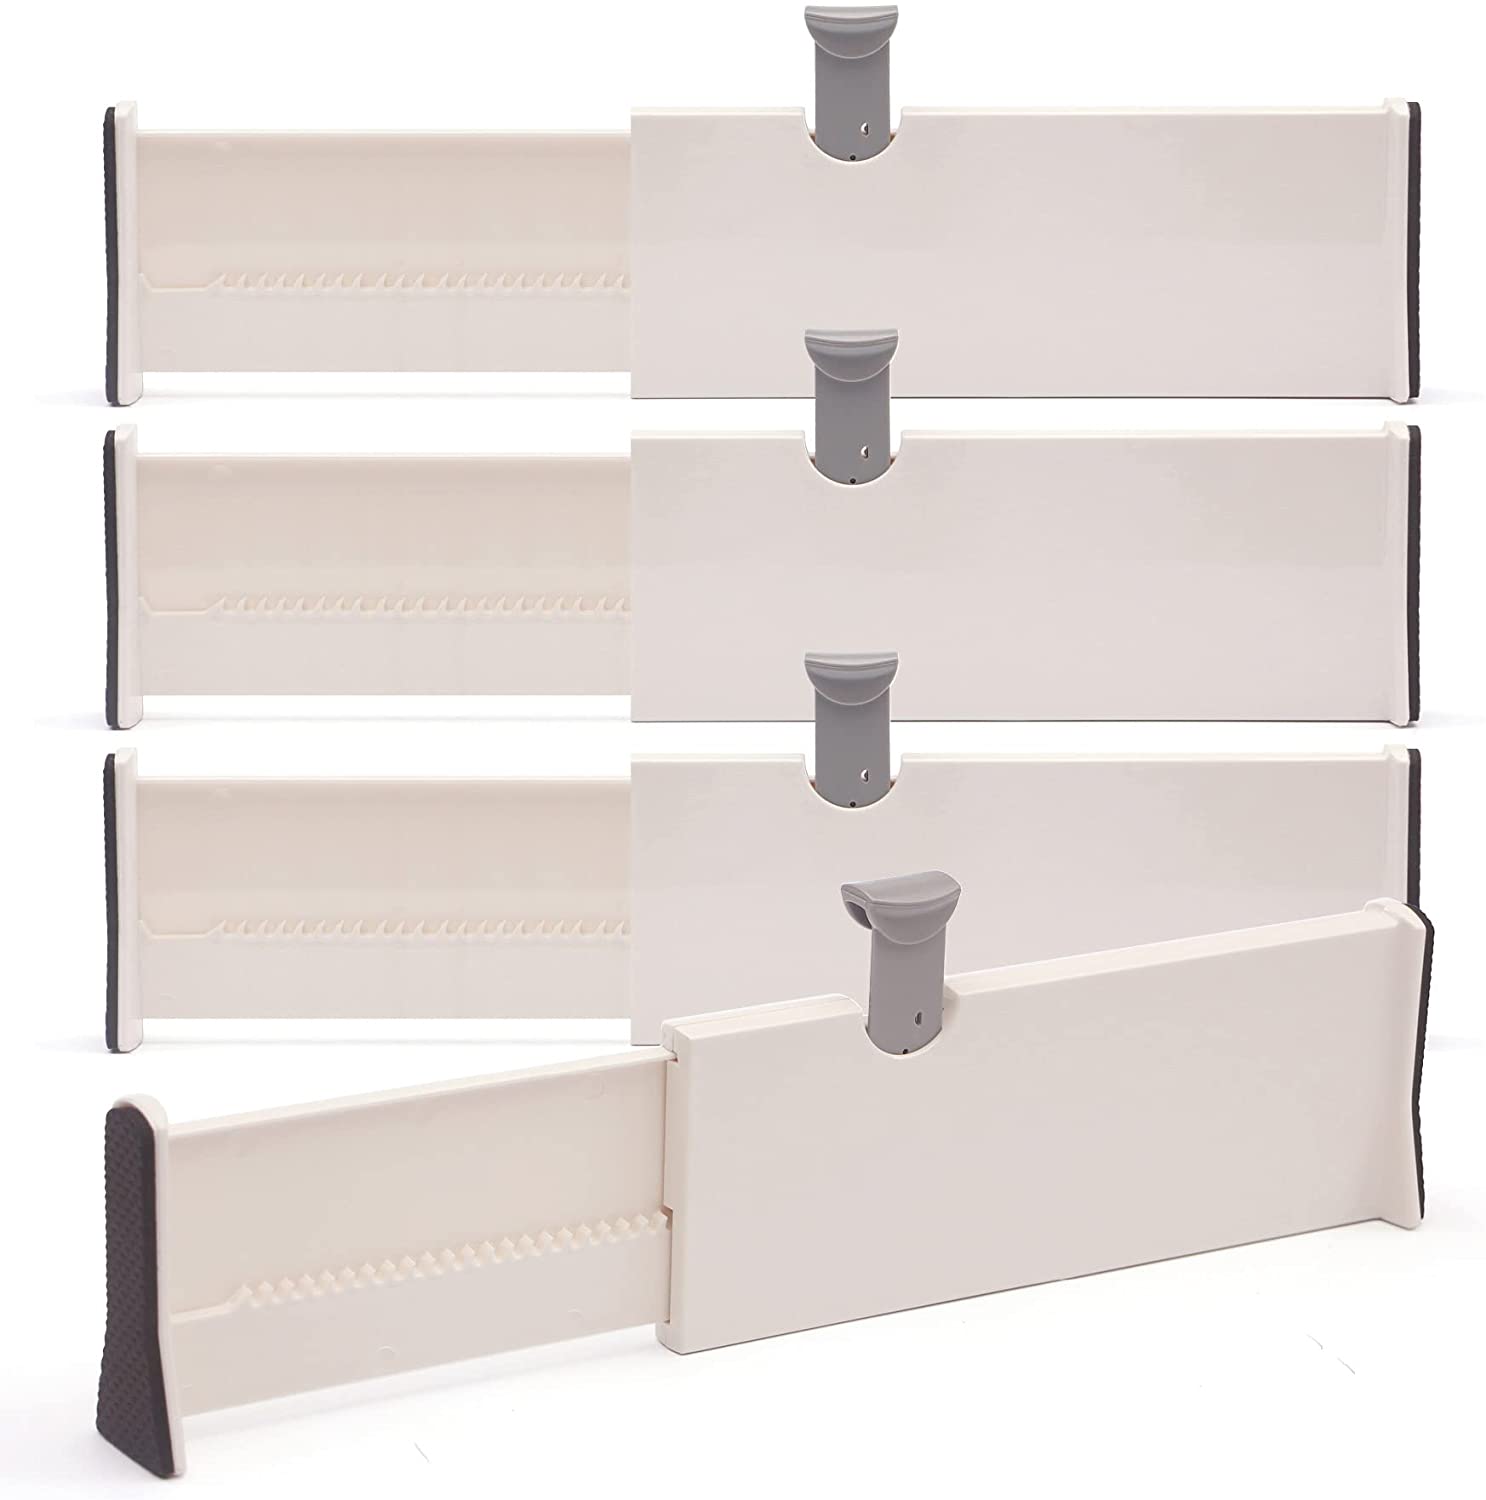 https://www.dontwasteyourmoney.com/wp-content/uploads/2019/10/diommell-adjustable-dresser-drawer-dividers.jpg